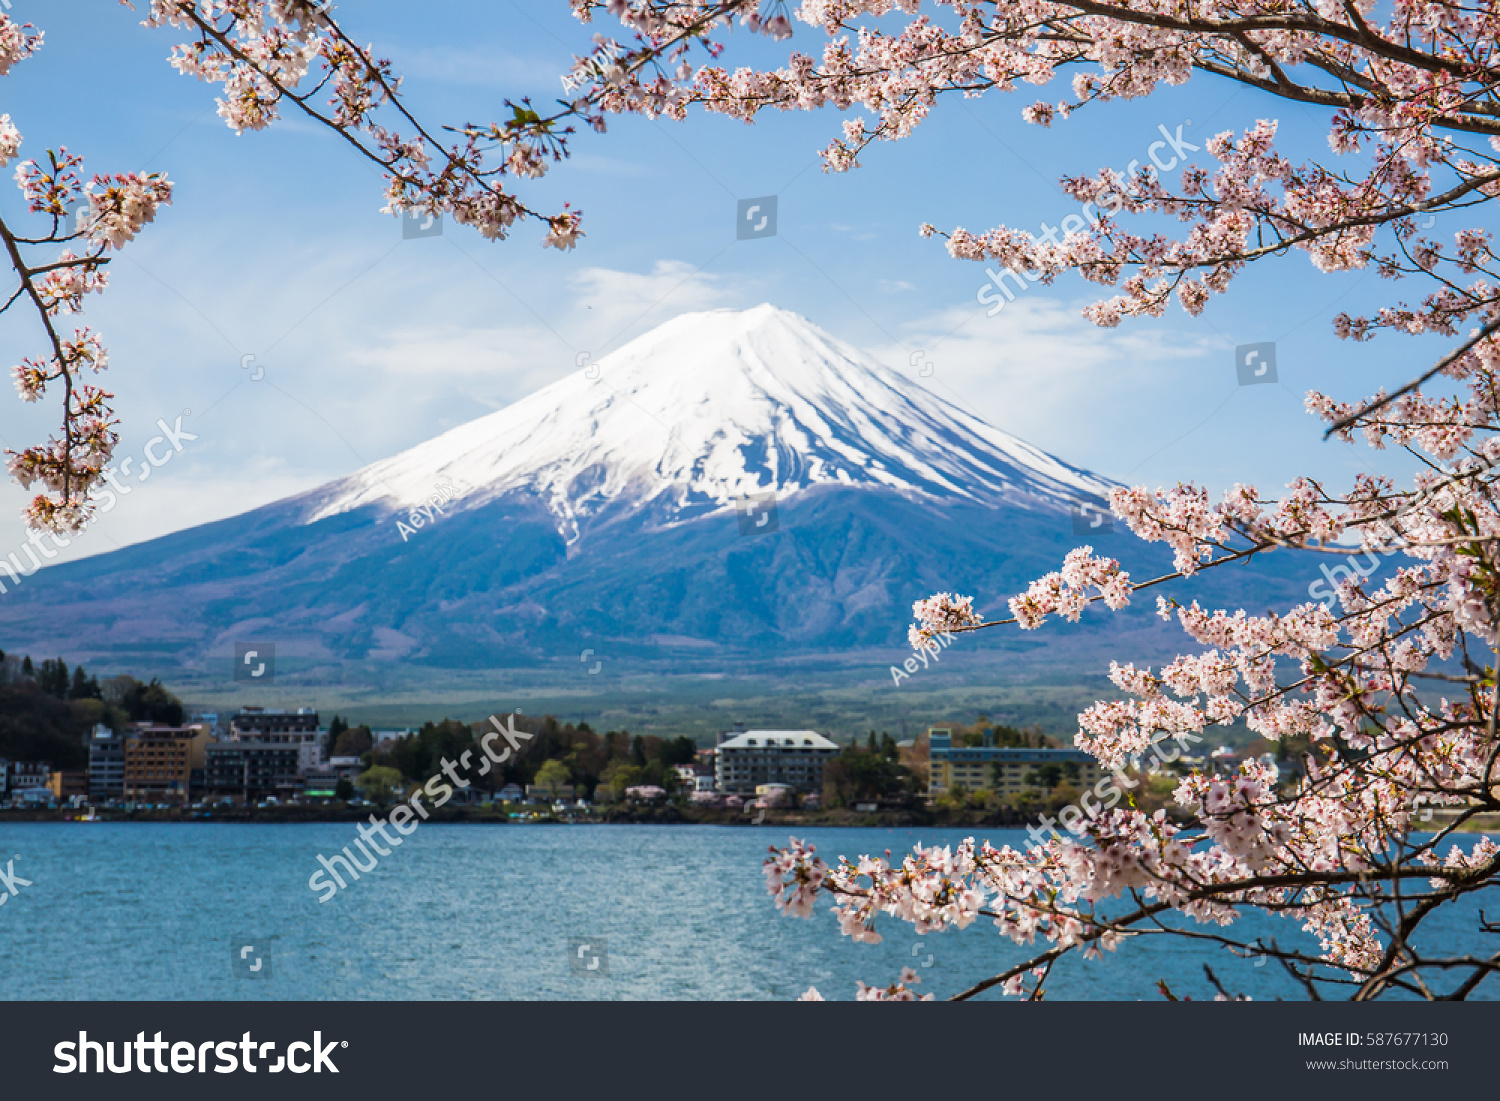 Mount Fuji with cherry blossom at Lake kawaguchiko in japan  #587677130